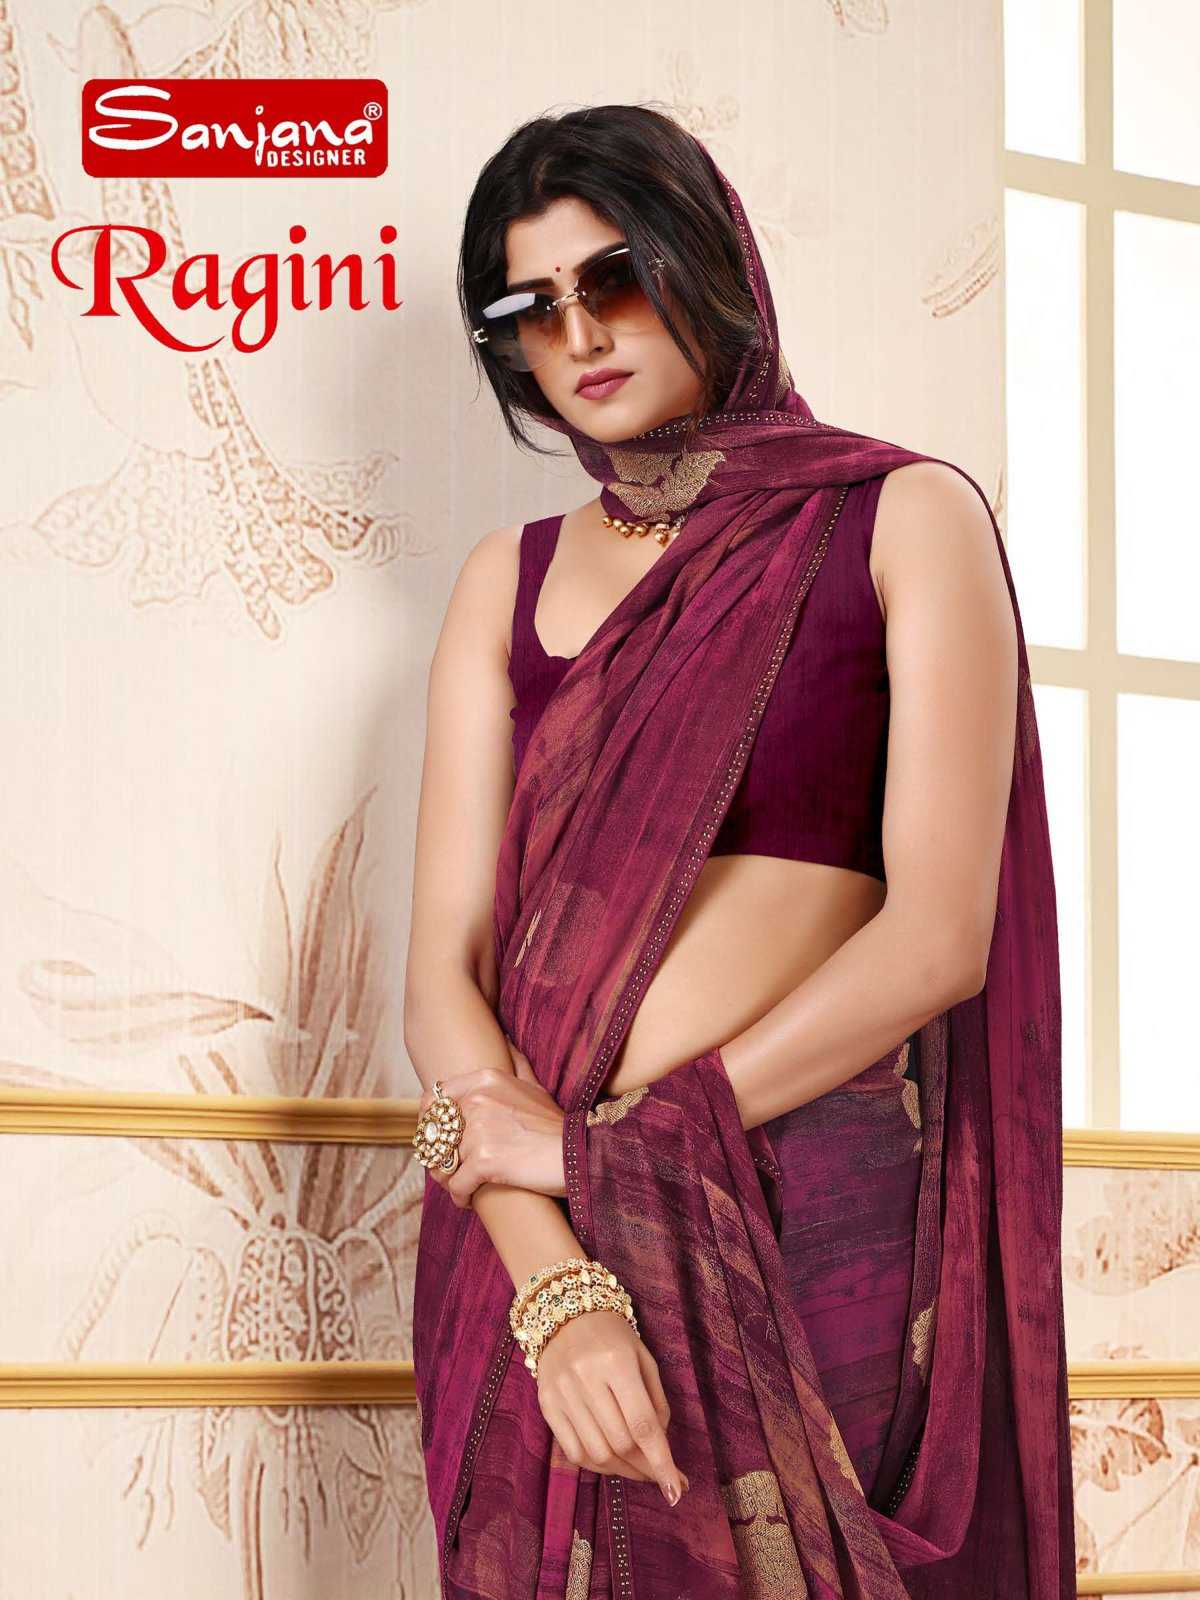 sanjana designer ragini casual fancy sarees supplier